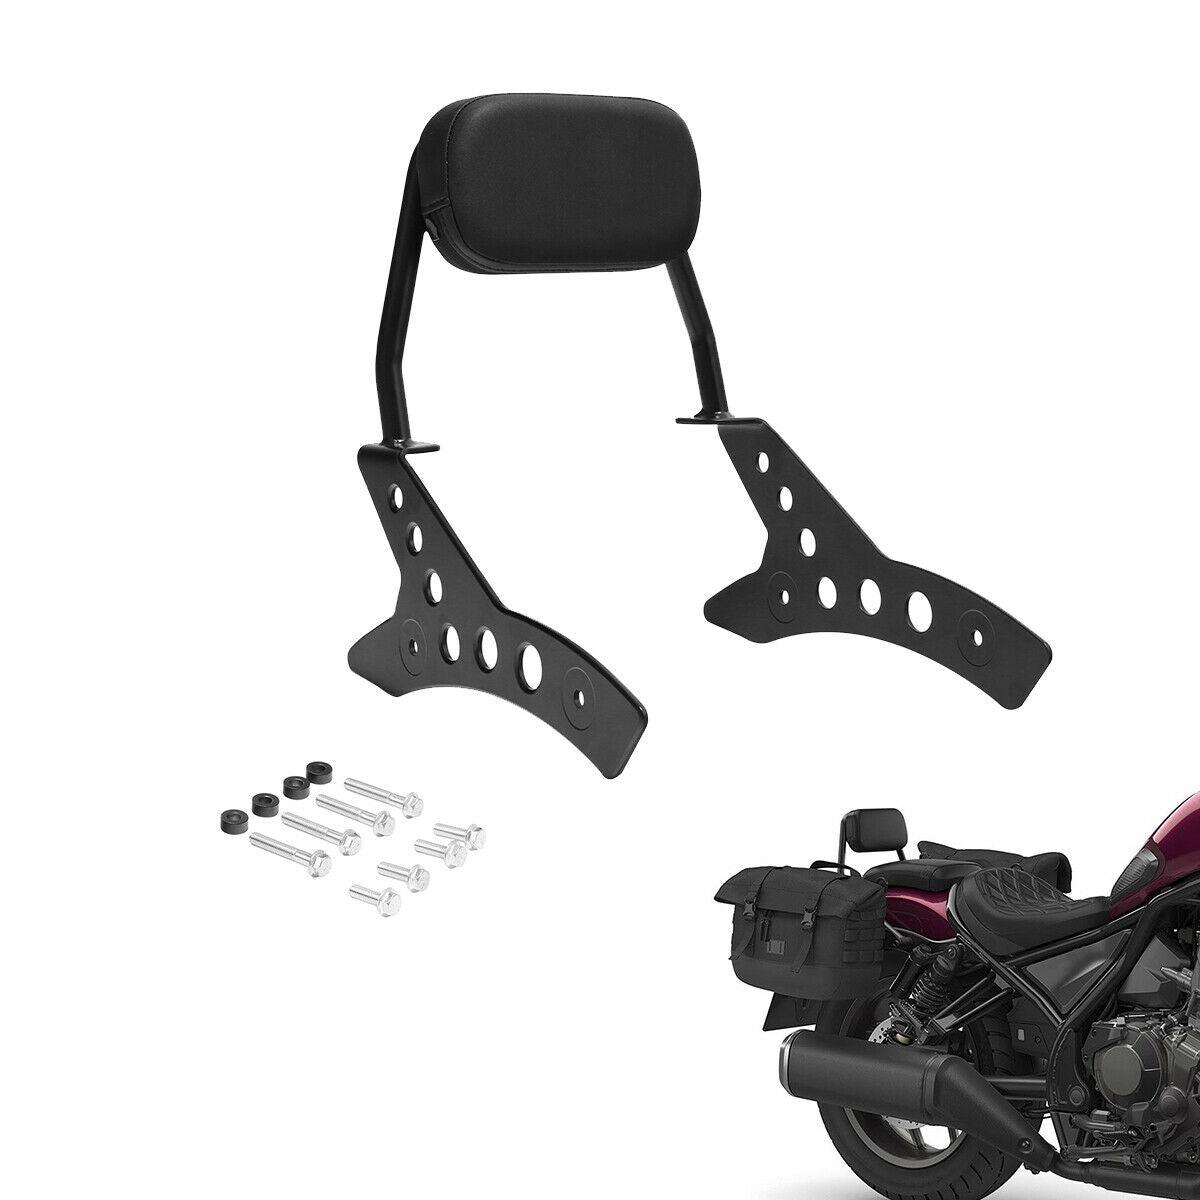 Black Rear Passenger Sissy Bar & Backrest Fit For Honda Rebel CMX1100 21-22 2021 - Moto Life Products